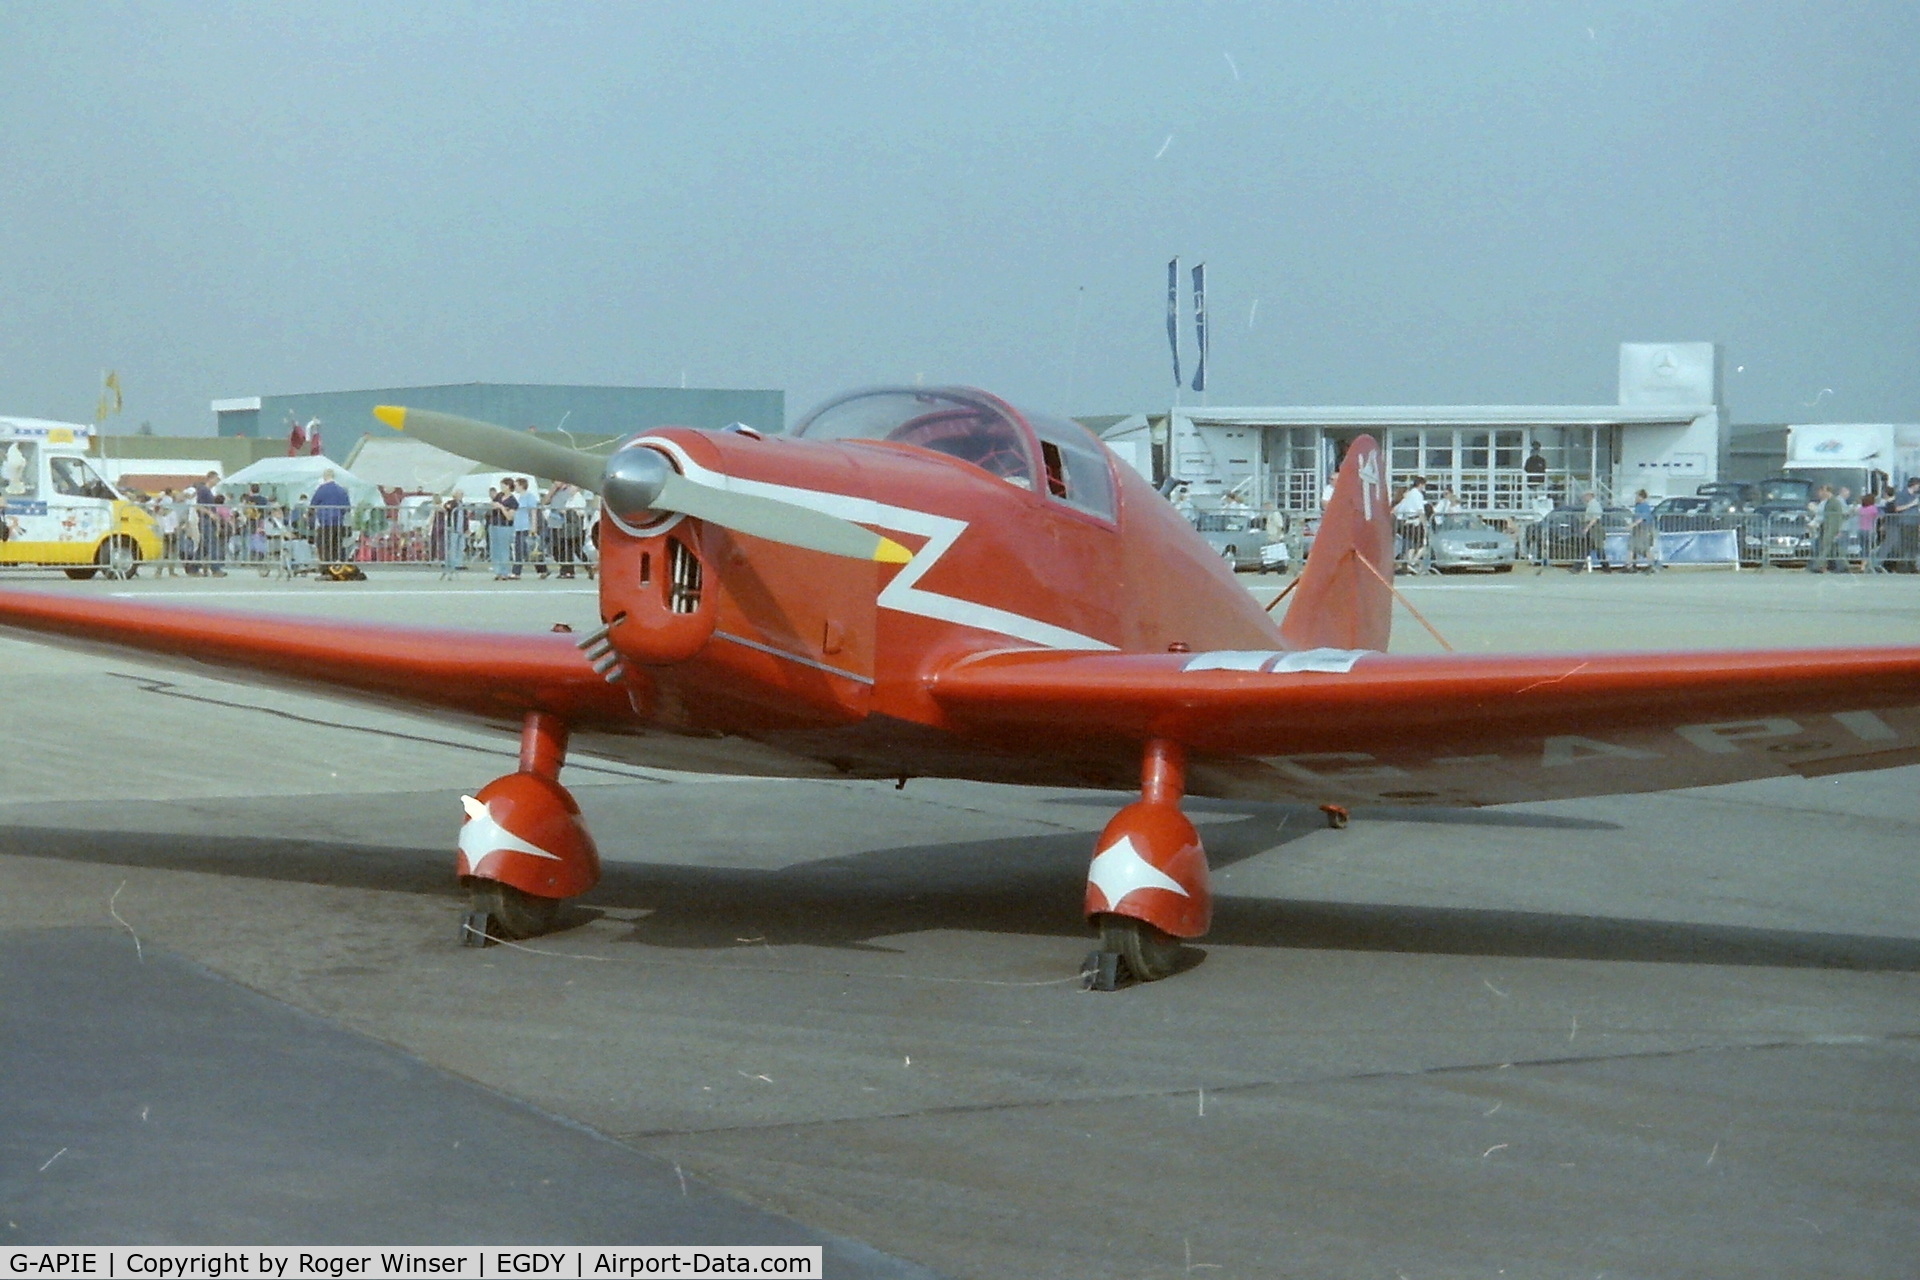 G-APIE, 1958 Tipsy Belfair C/N 535, At RNAS Yeovilton Naval Air Day 2002?